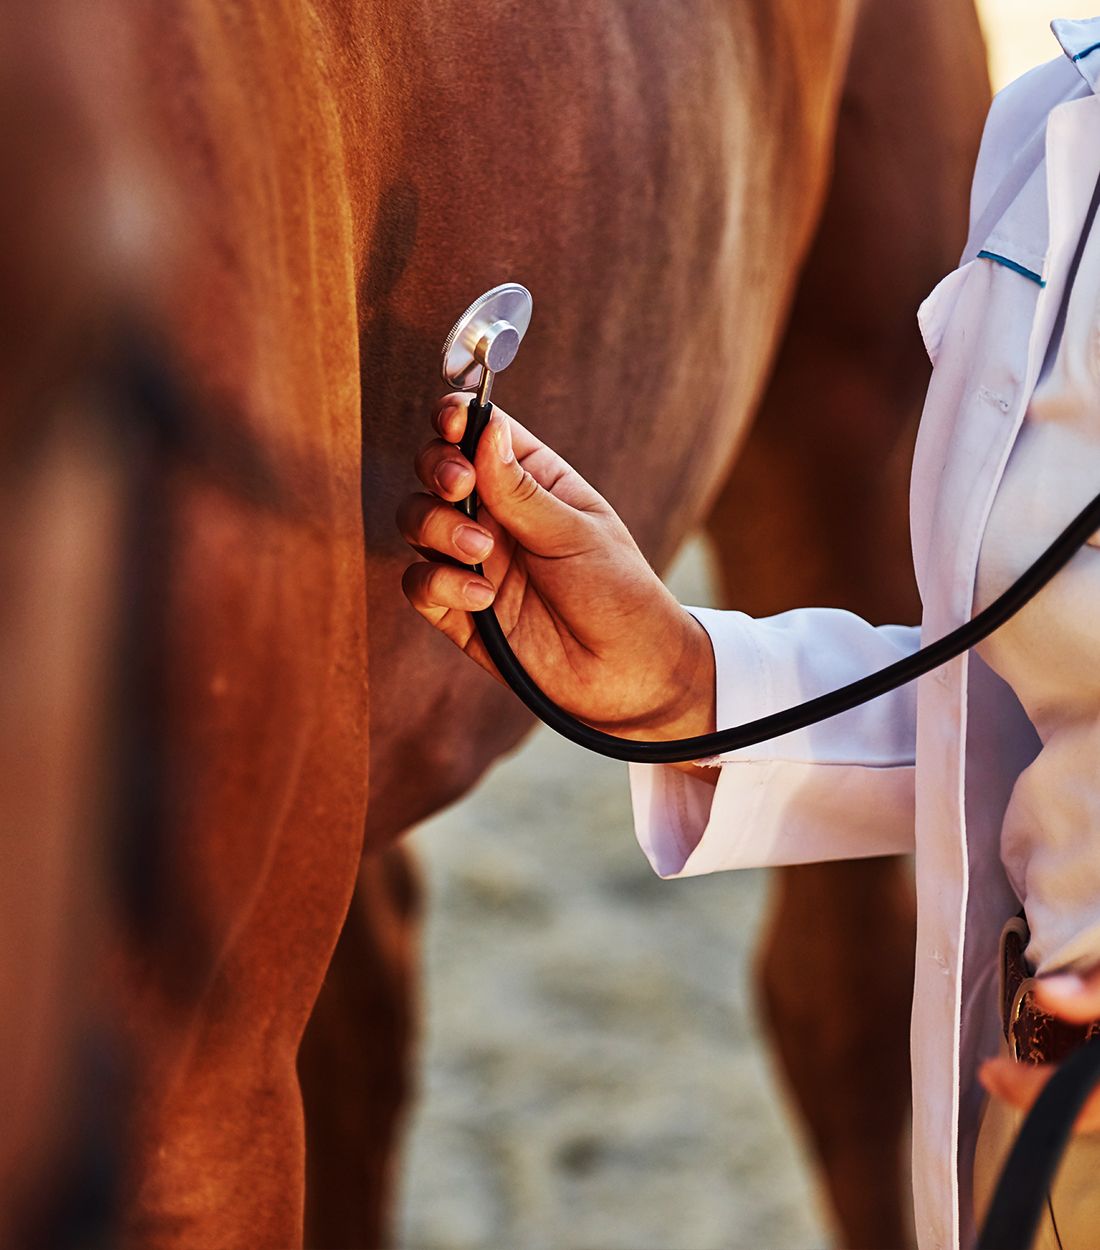 using stethoscope female vet examining horse outdoors farm daytime